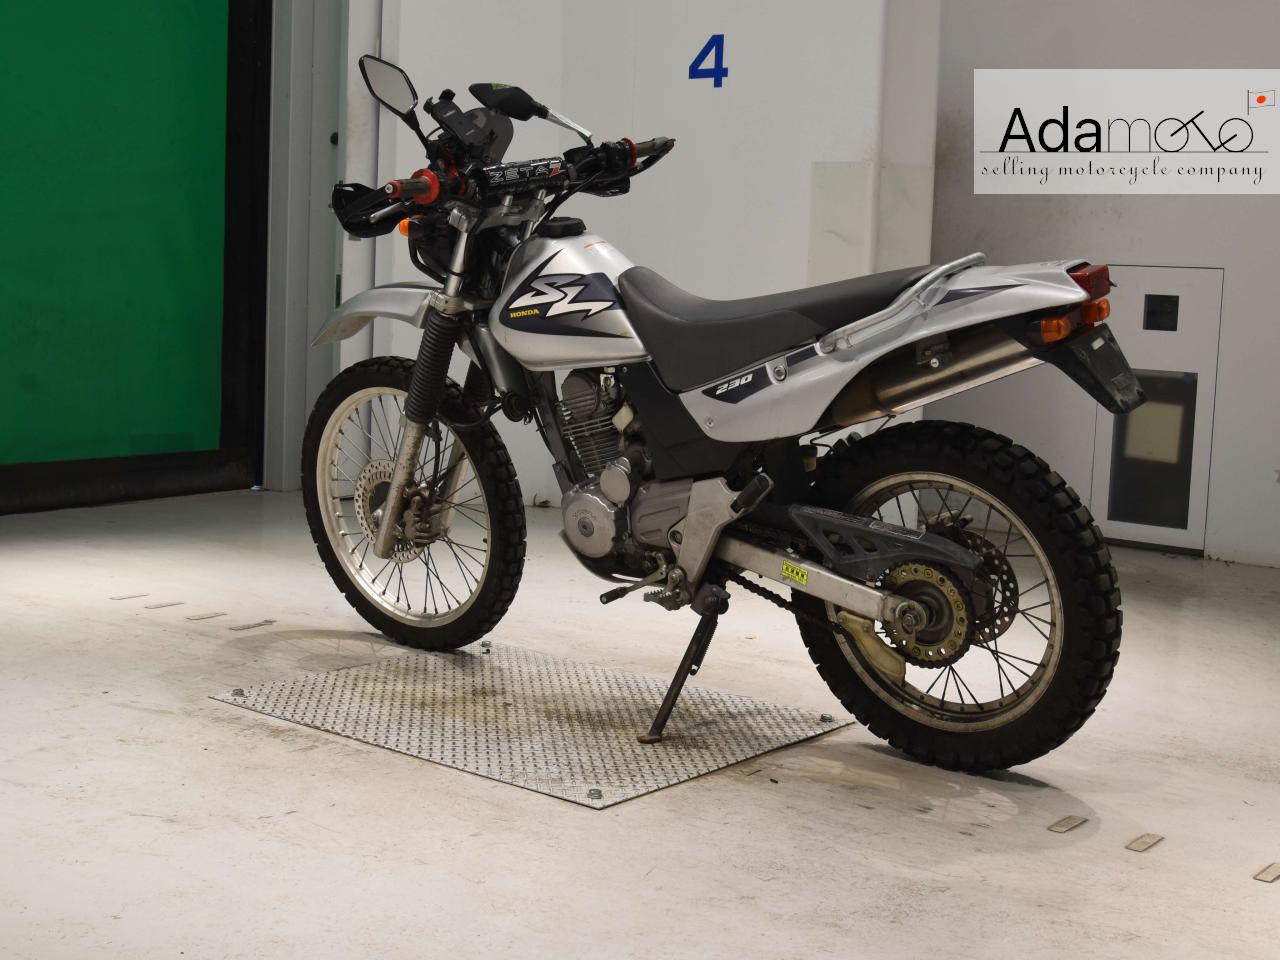 Honda SL230 - Adamoto - Motorcycles from Japan